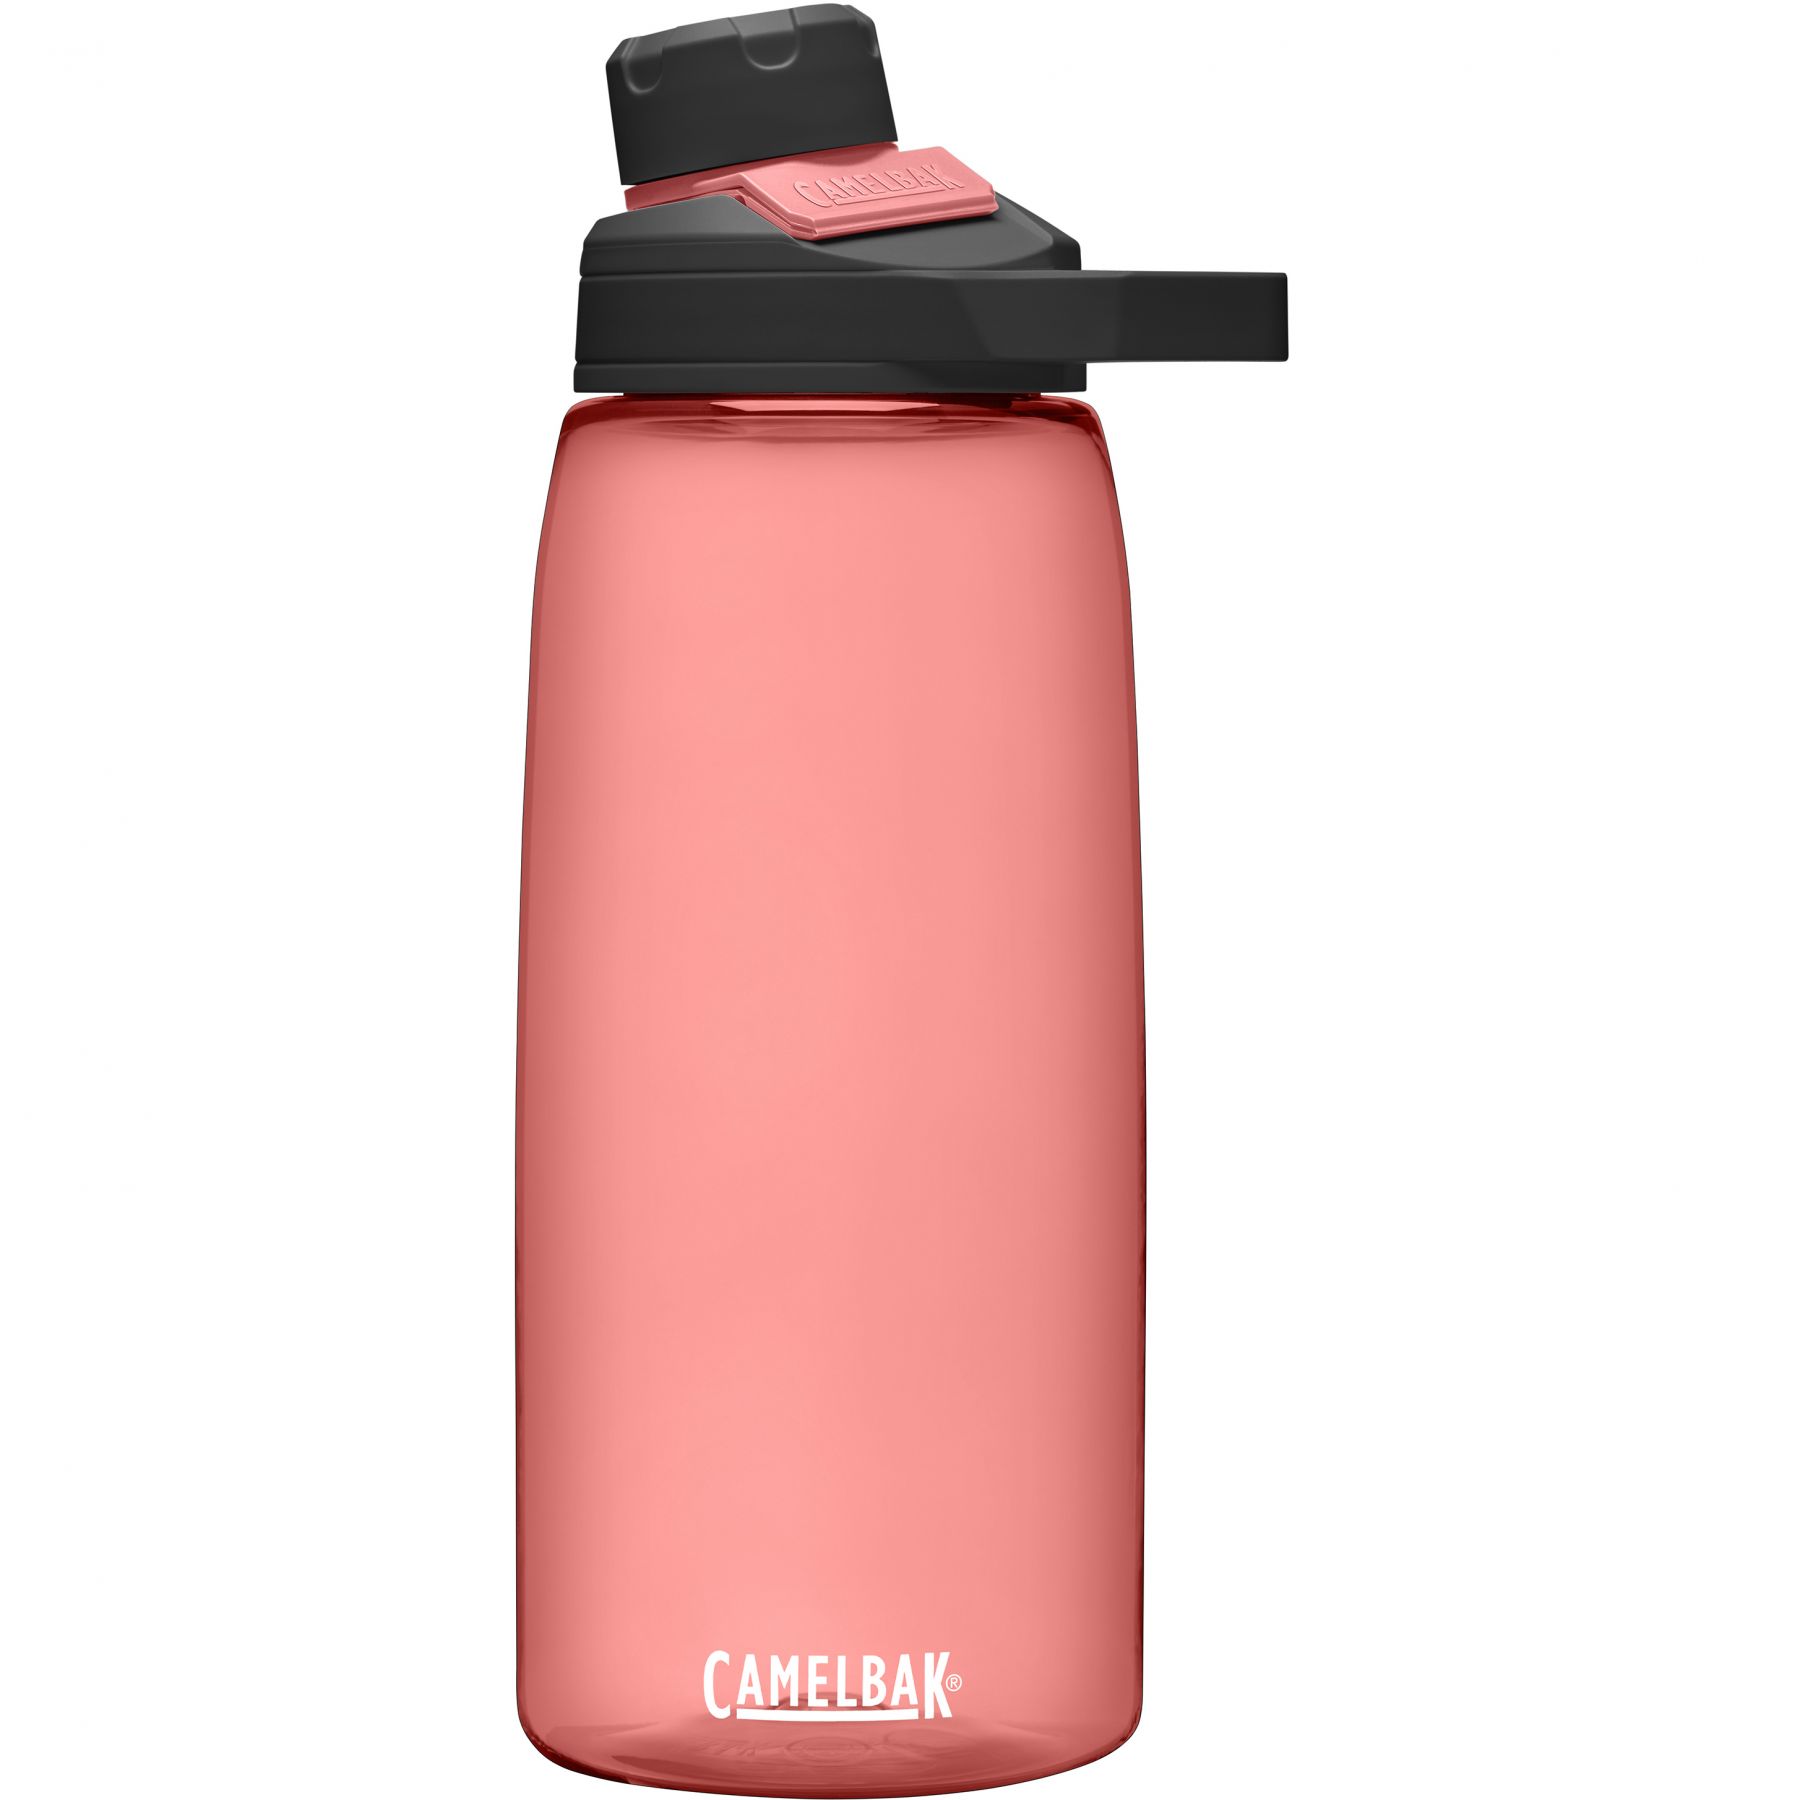 Se Camelbak Chute Mag - Drikkeflaske - 1 liter - Rose hos AktivVinter.dk